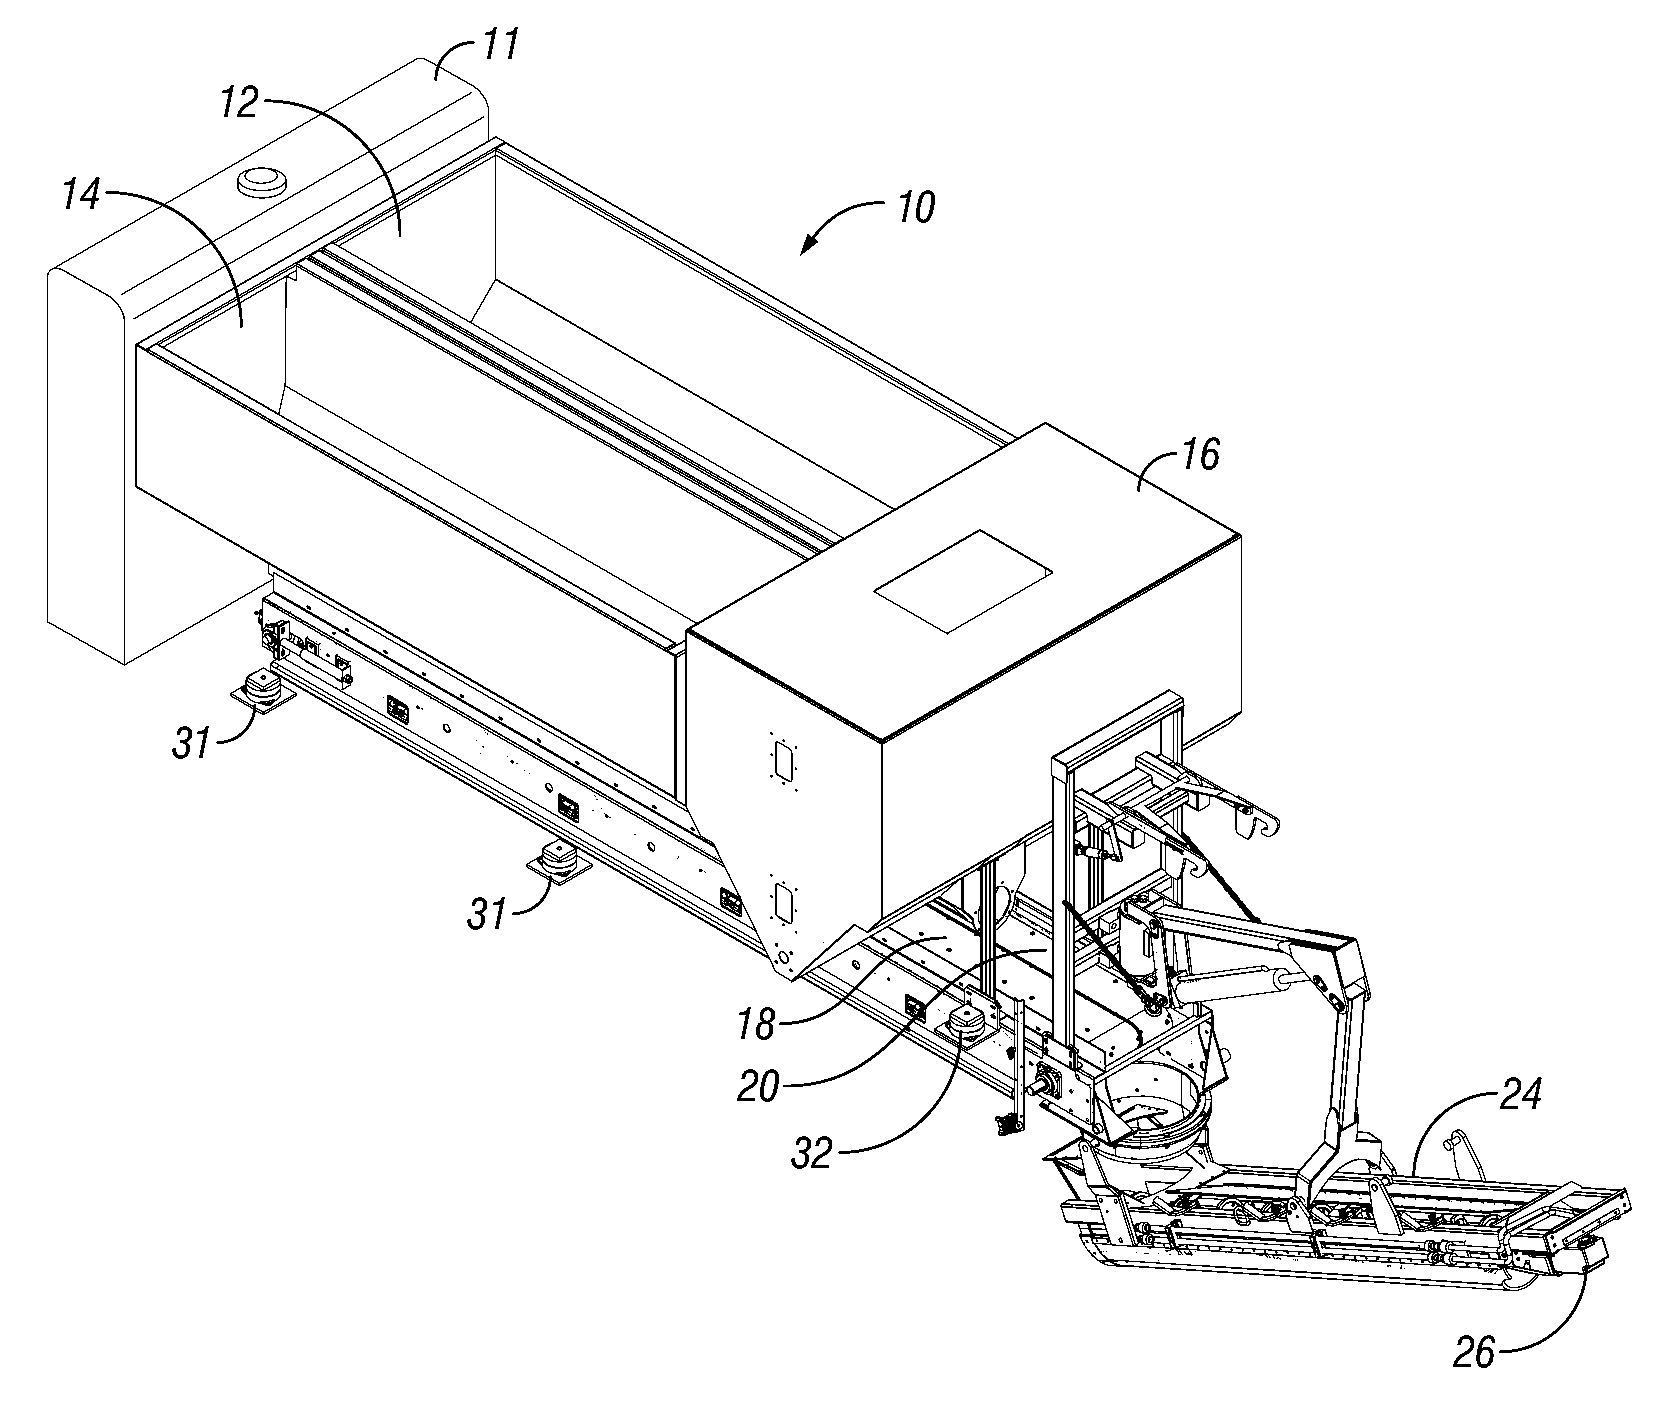 Volumetric concrete mixing method and apparatus